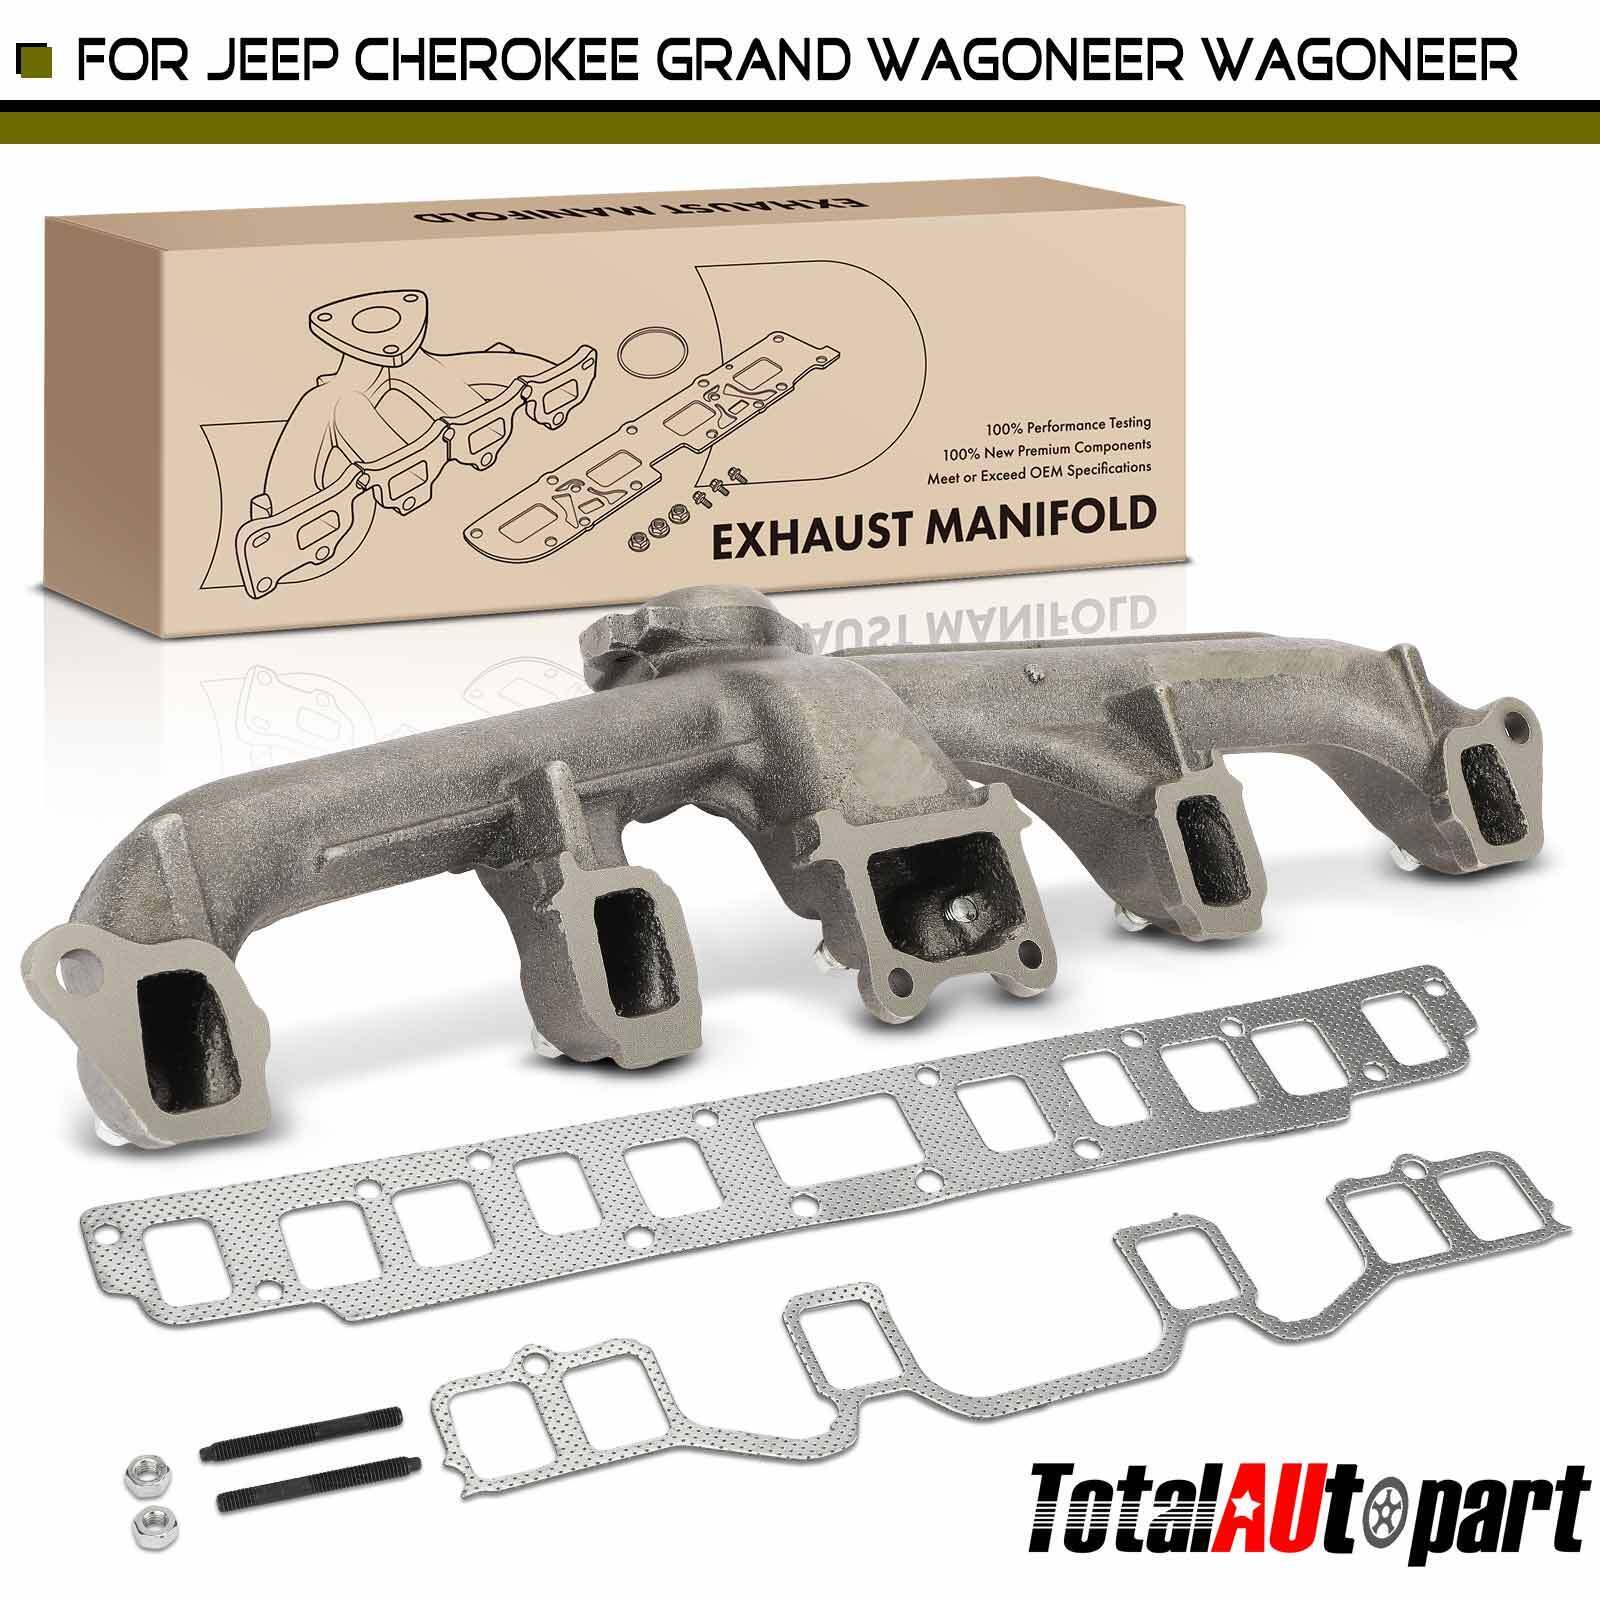 1x Exhaust Manifold w/ Gasket for Jeep Cherokee Grand Wagoneer Wagoneer J10 AMC